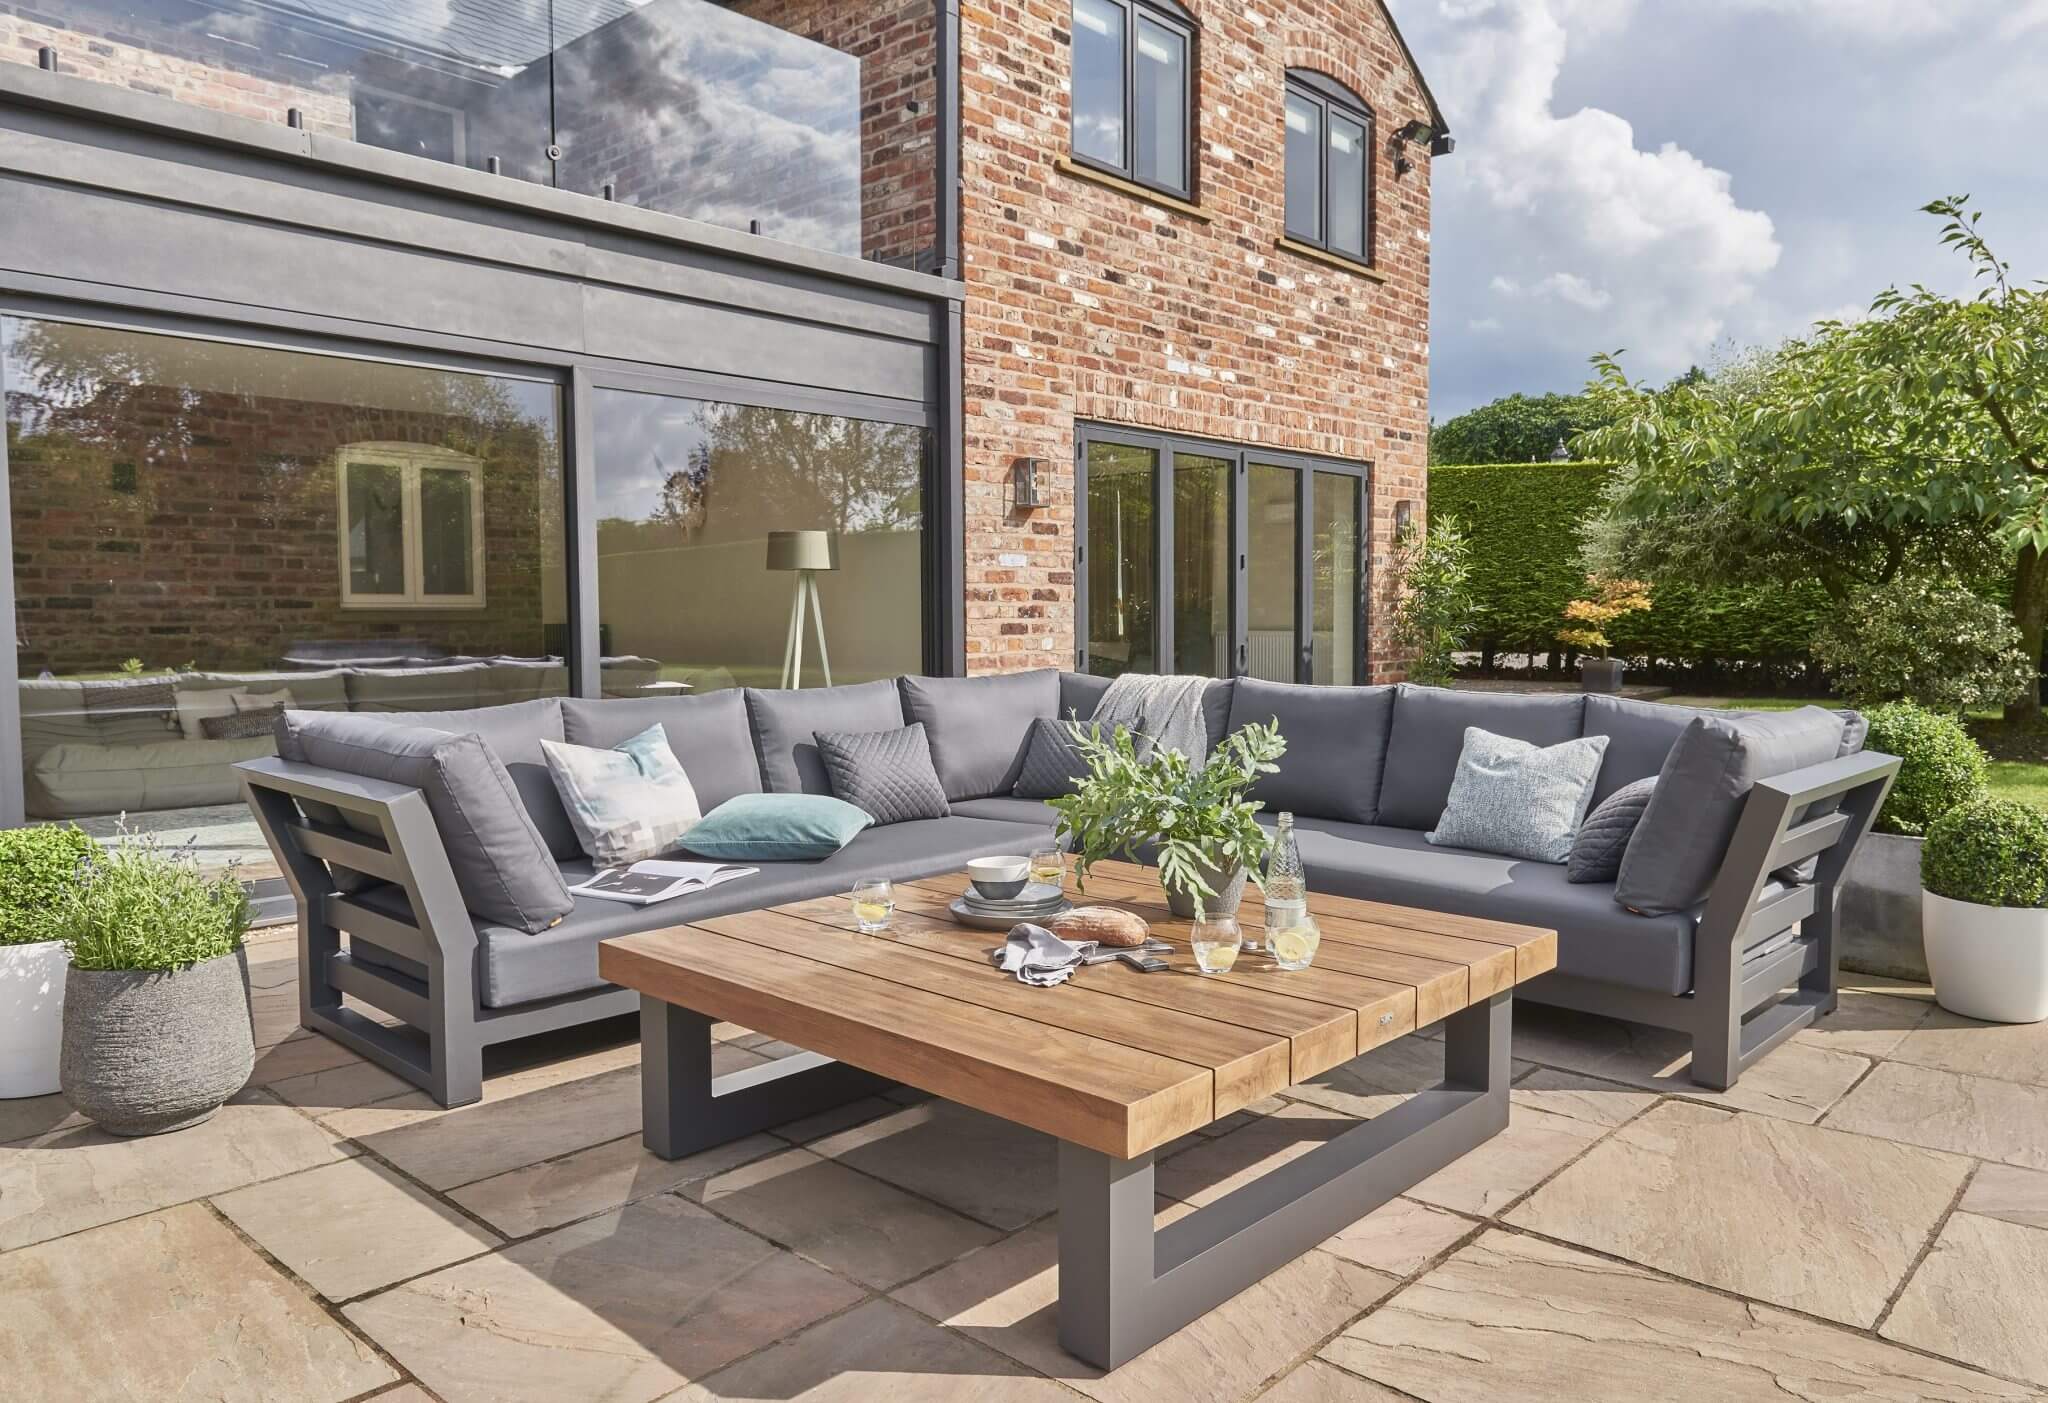 Luxury Garden Furniture for Sale Online UK - Garden Centre Shopping